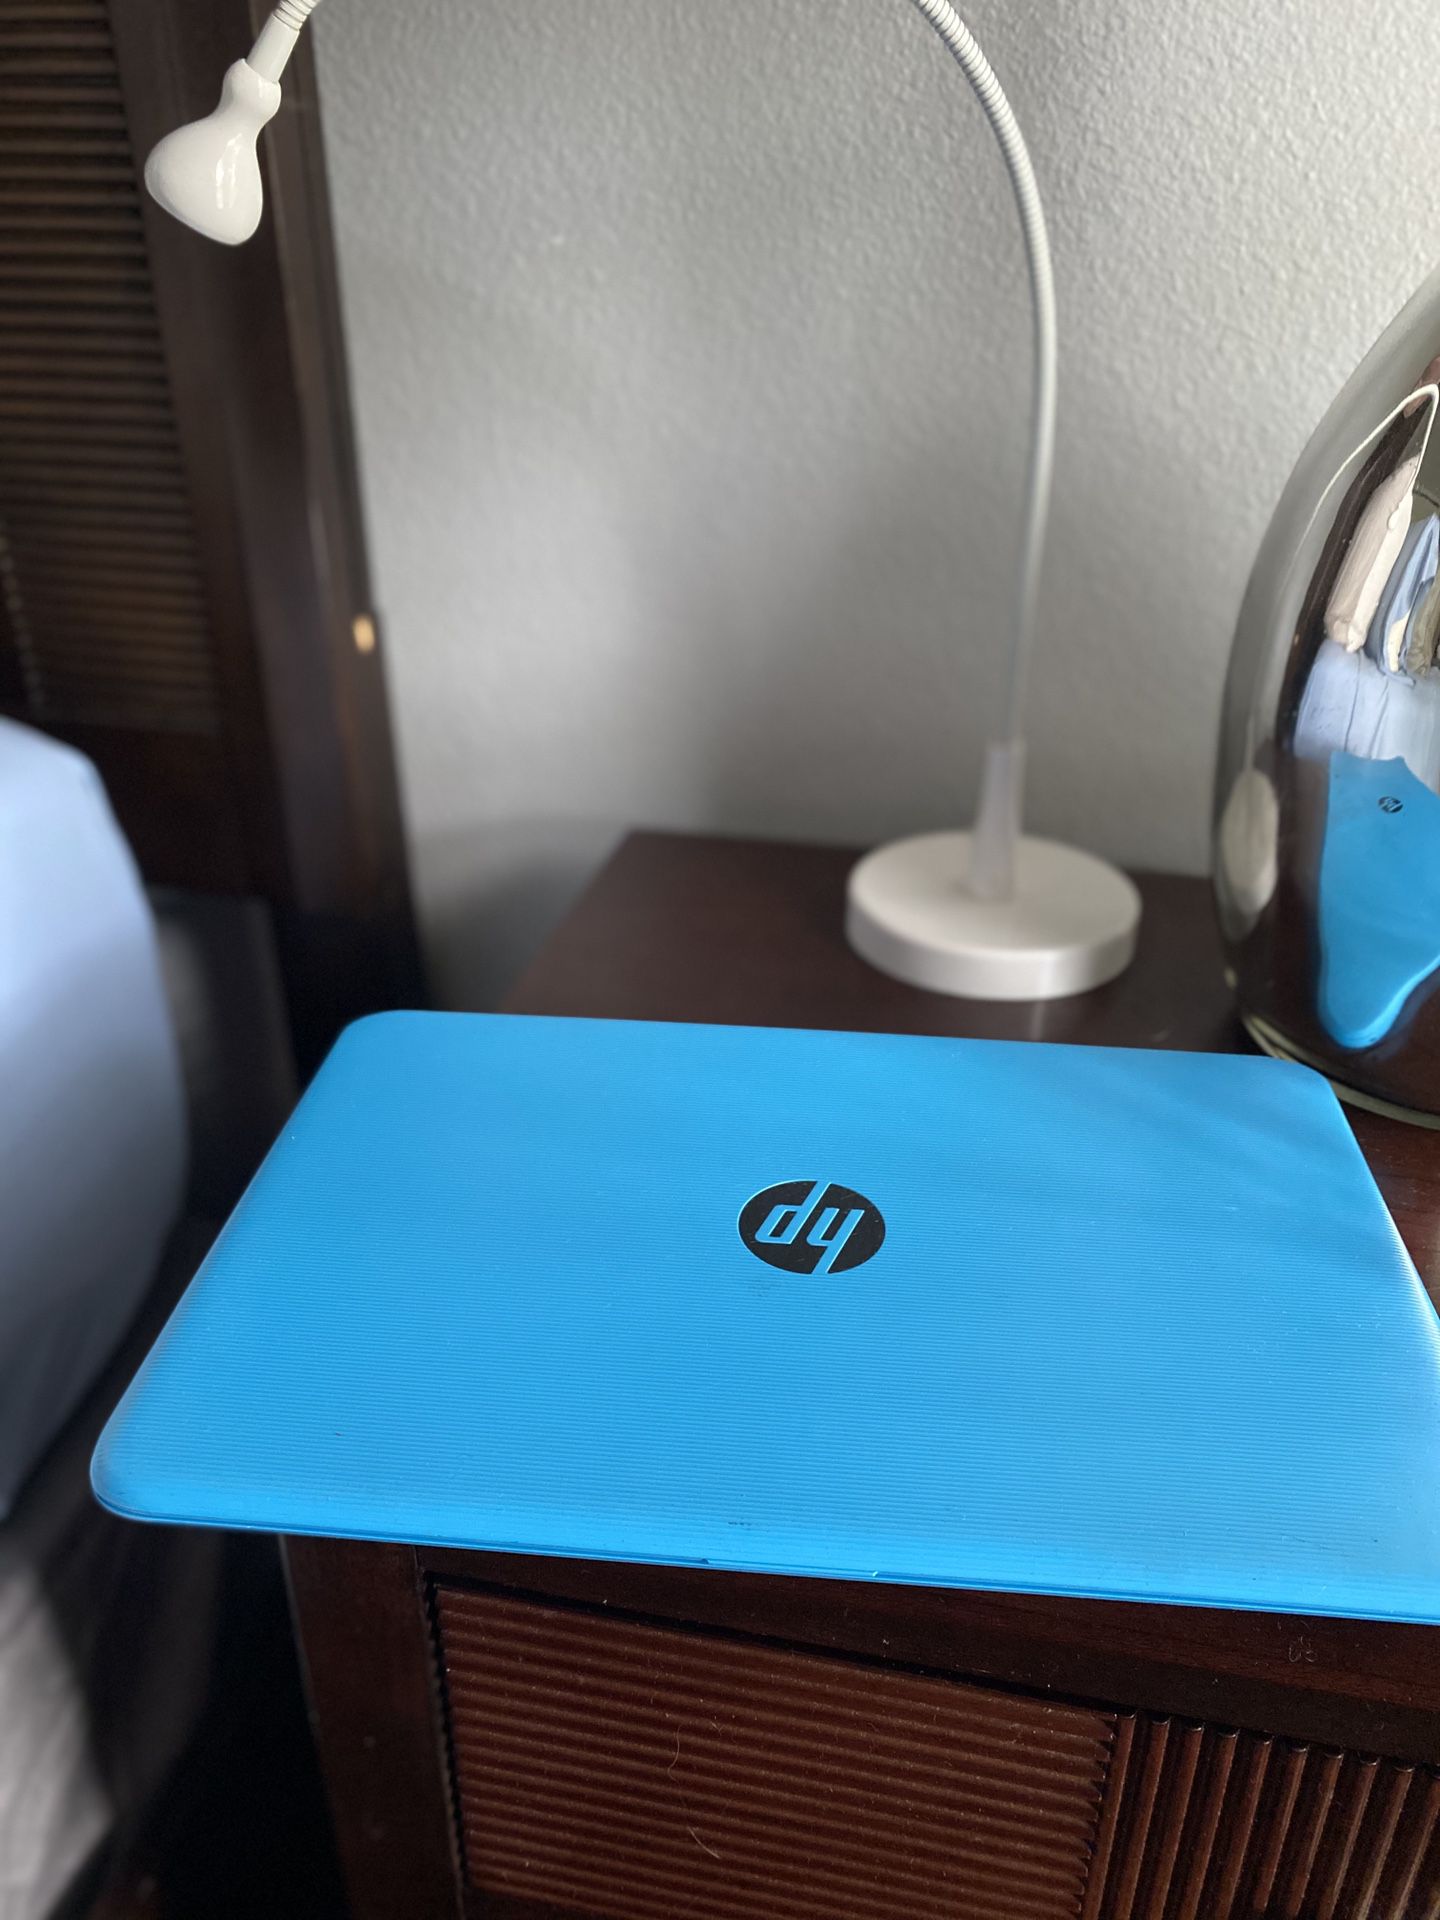 Blue HP laptop